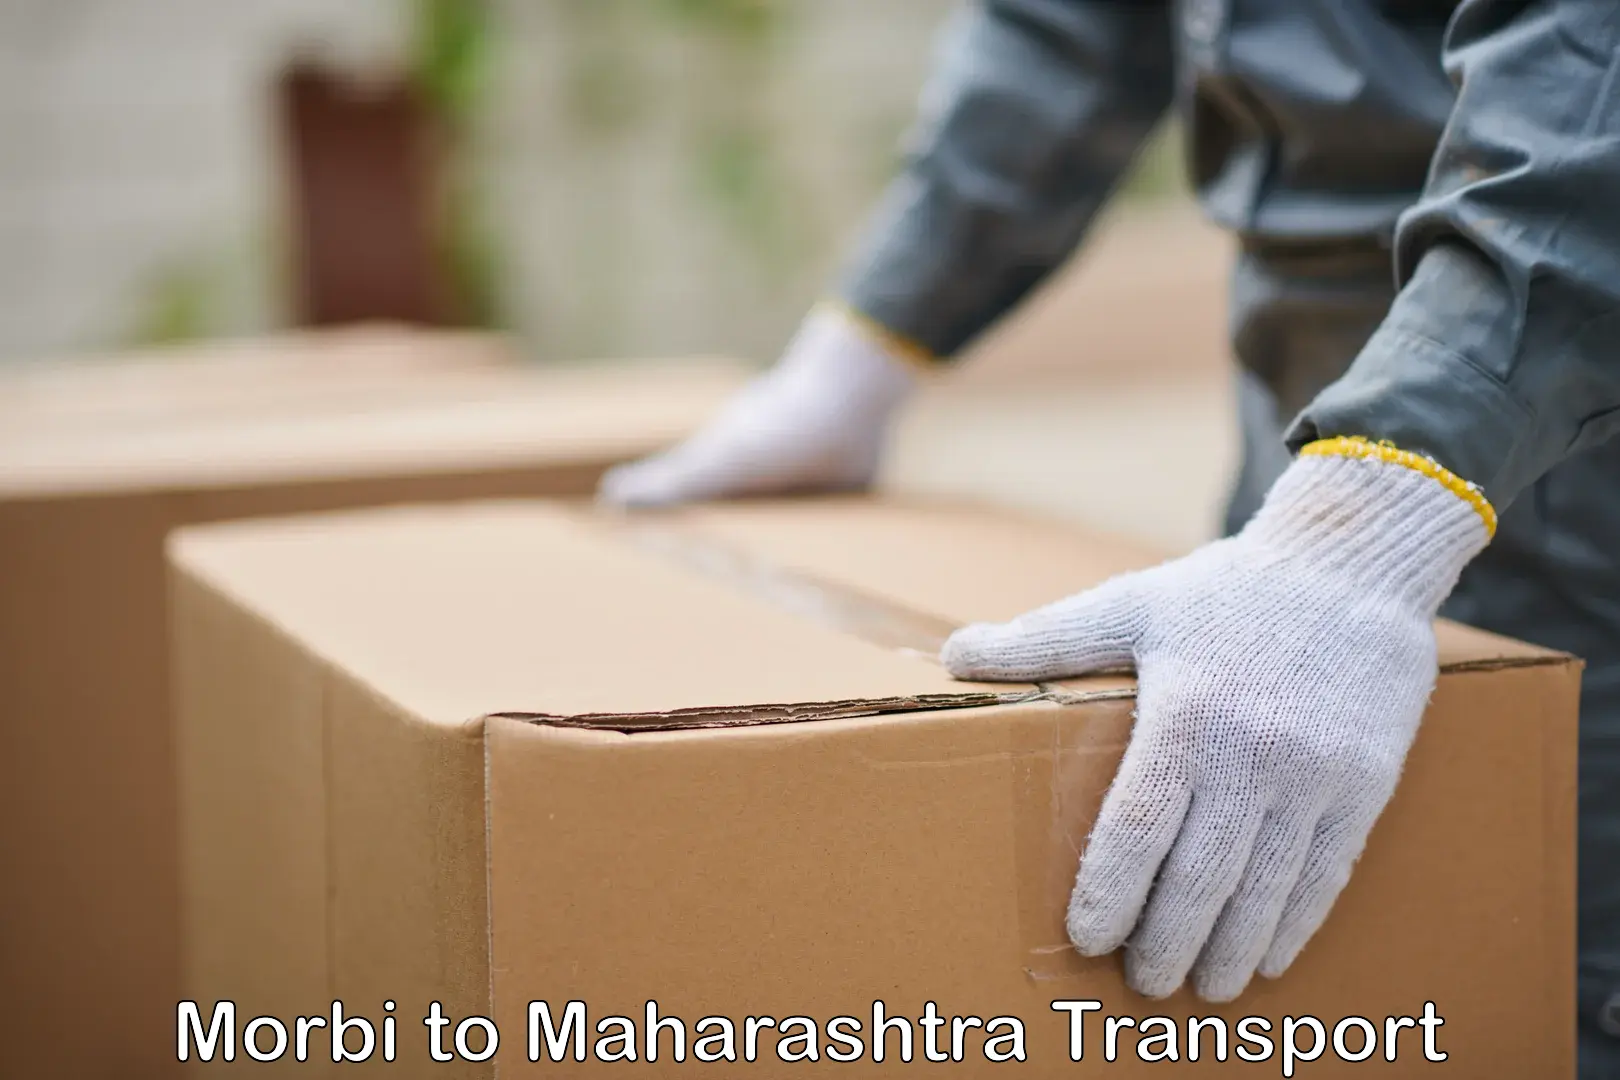 Delivery service Morbi to Chembur